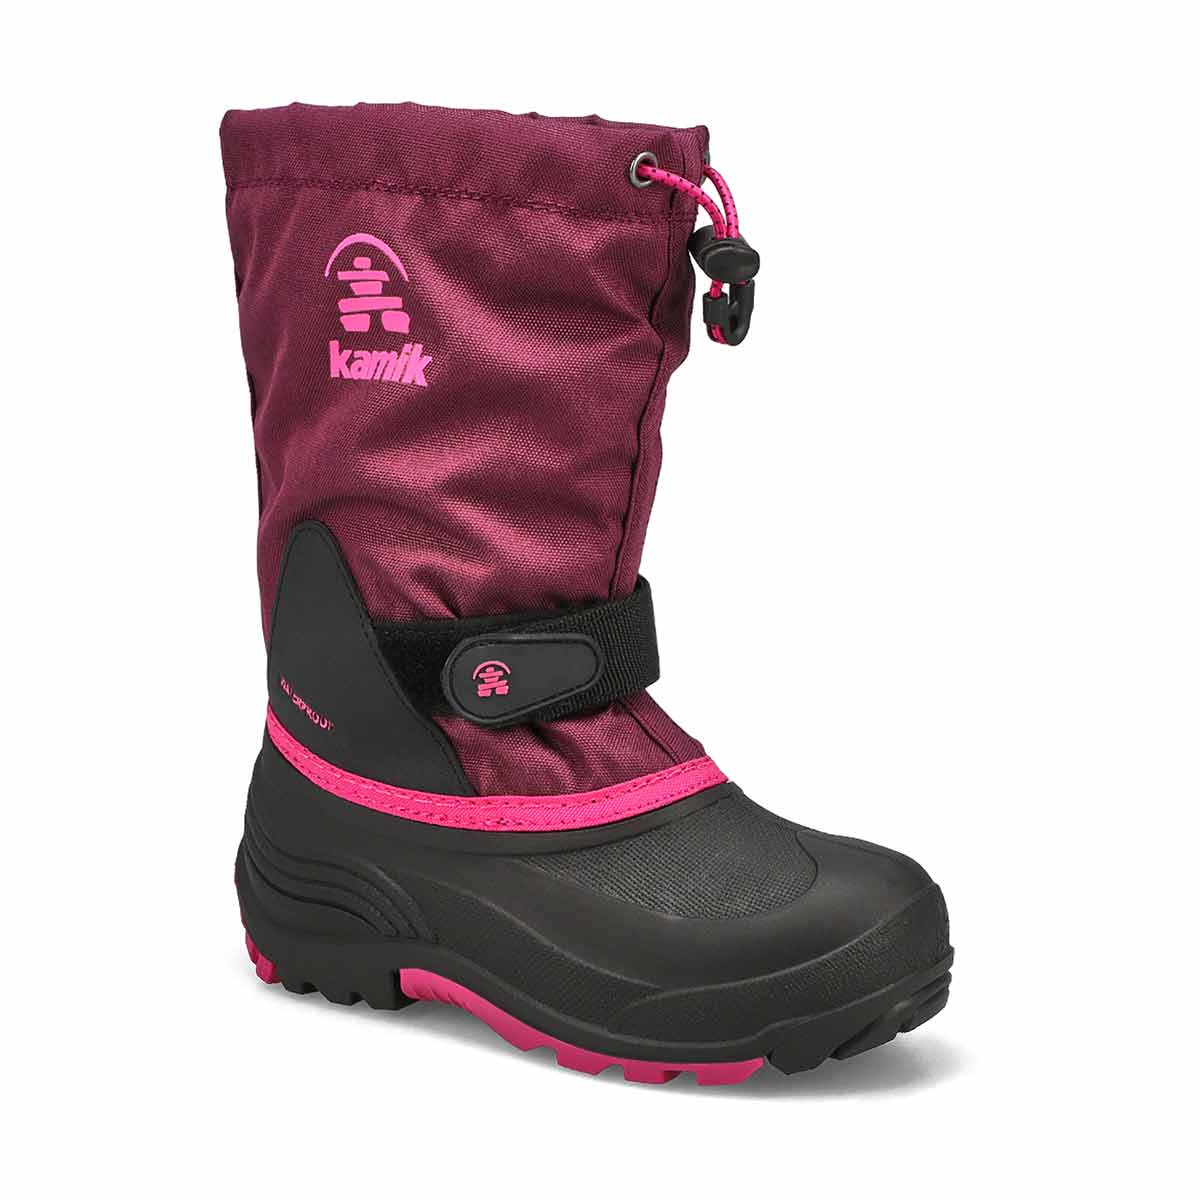 Girls' Waterbug 5 Waterproof Winter Boot - Grape